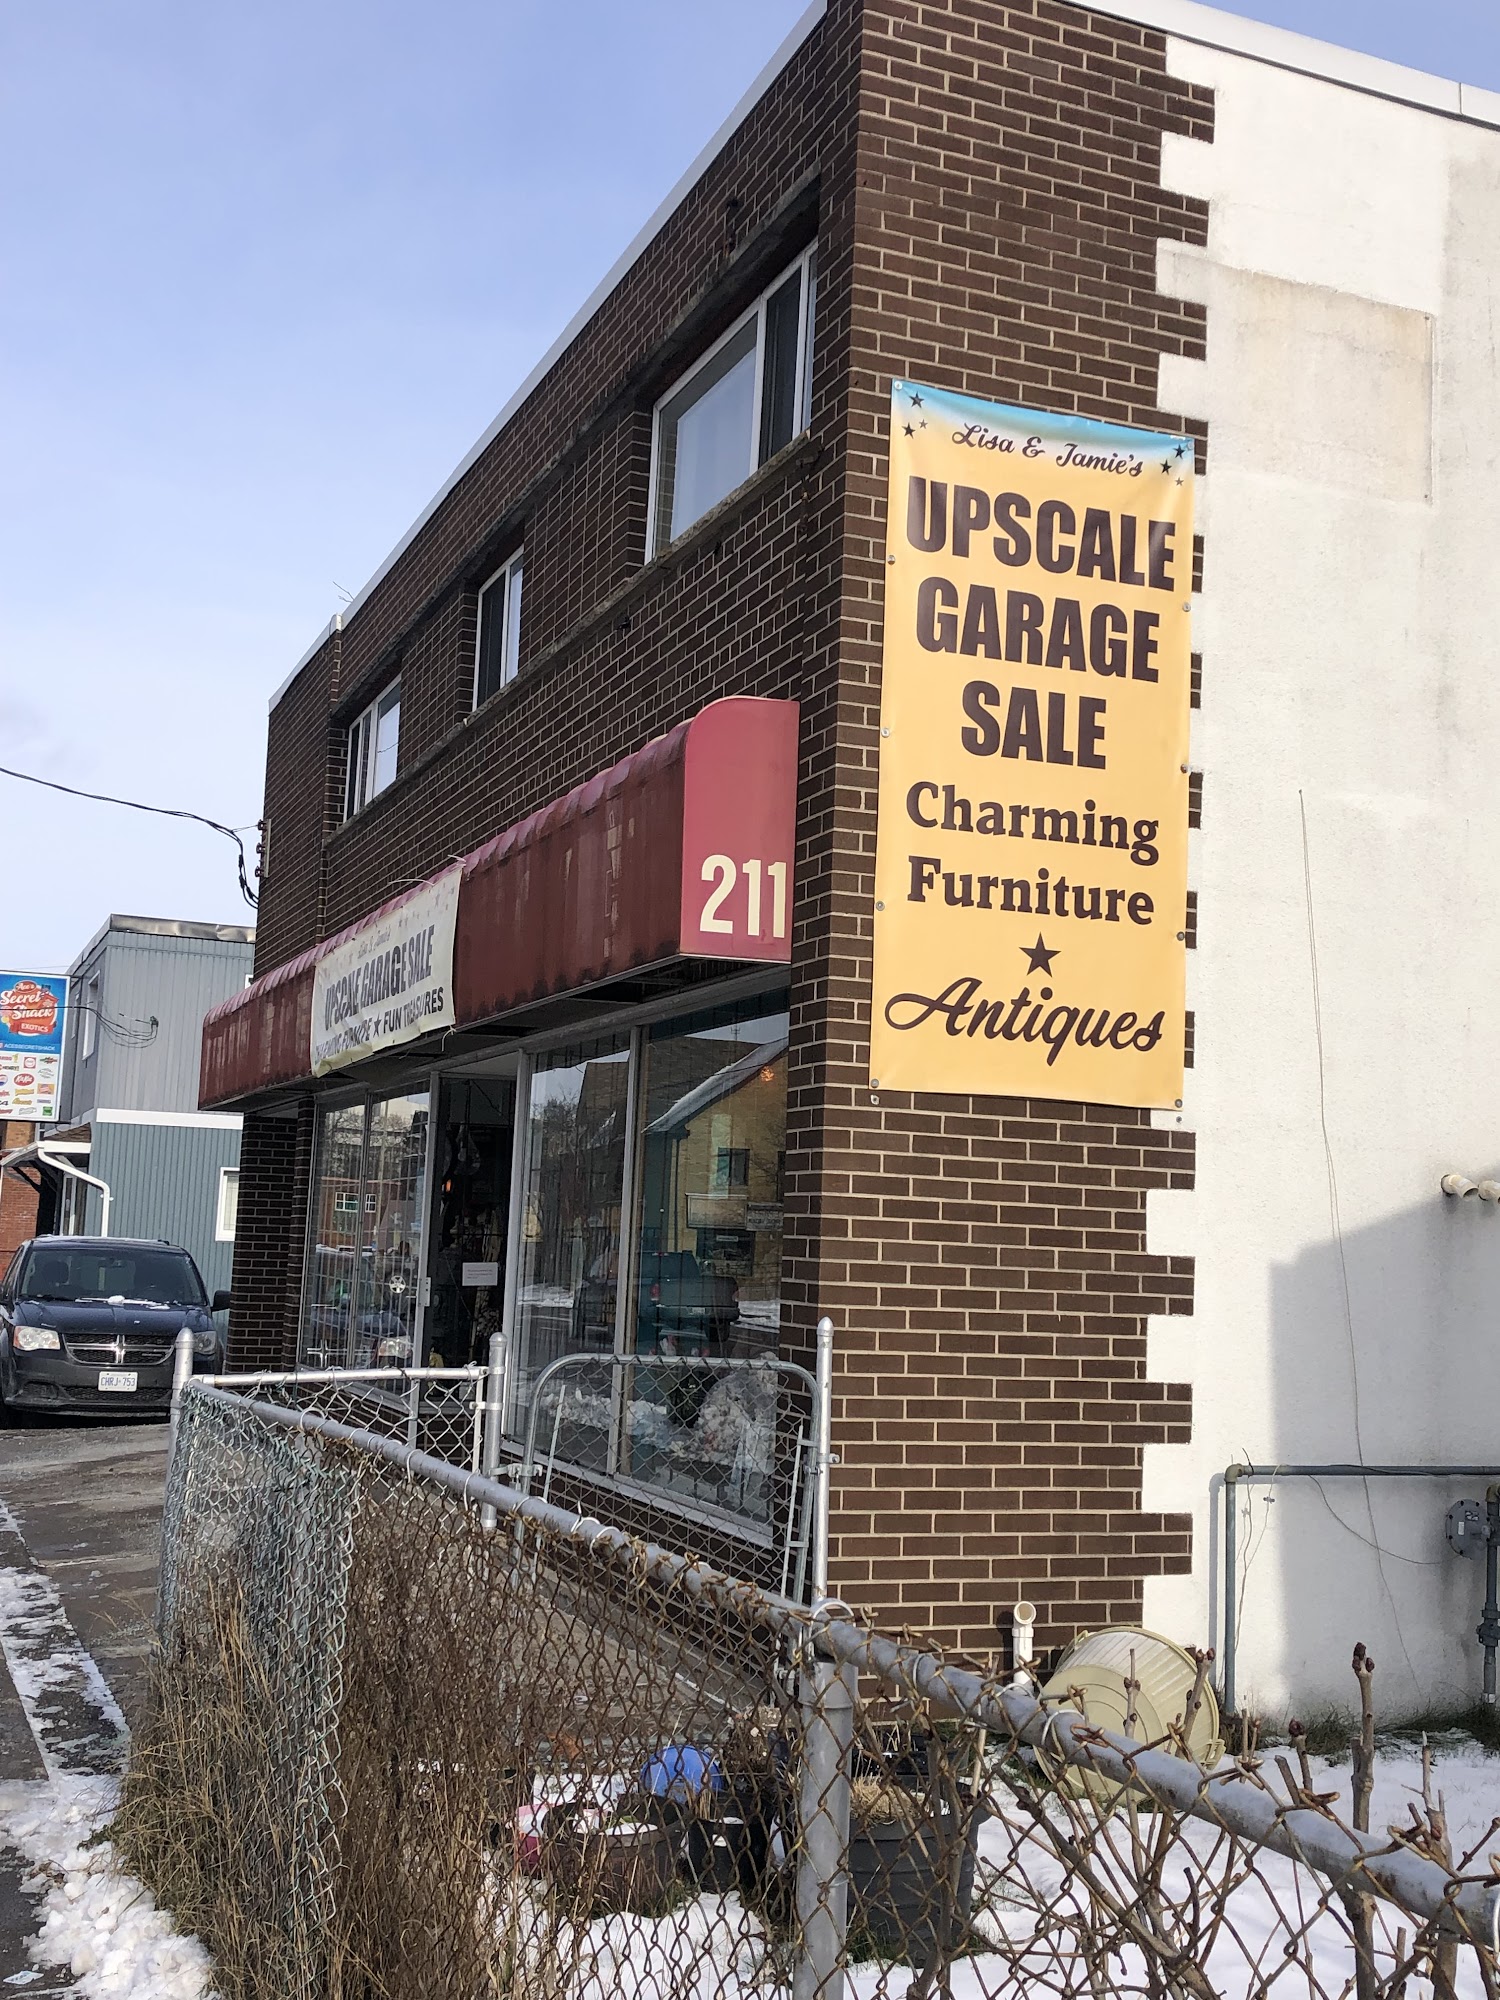 Lisa’s Upscale Garage Sale